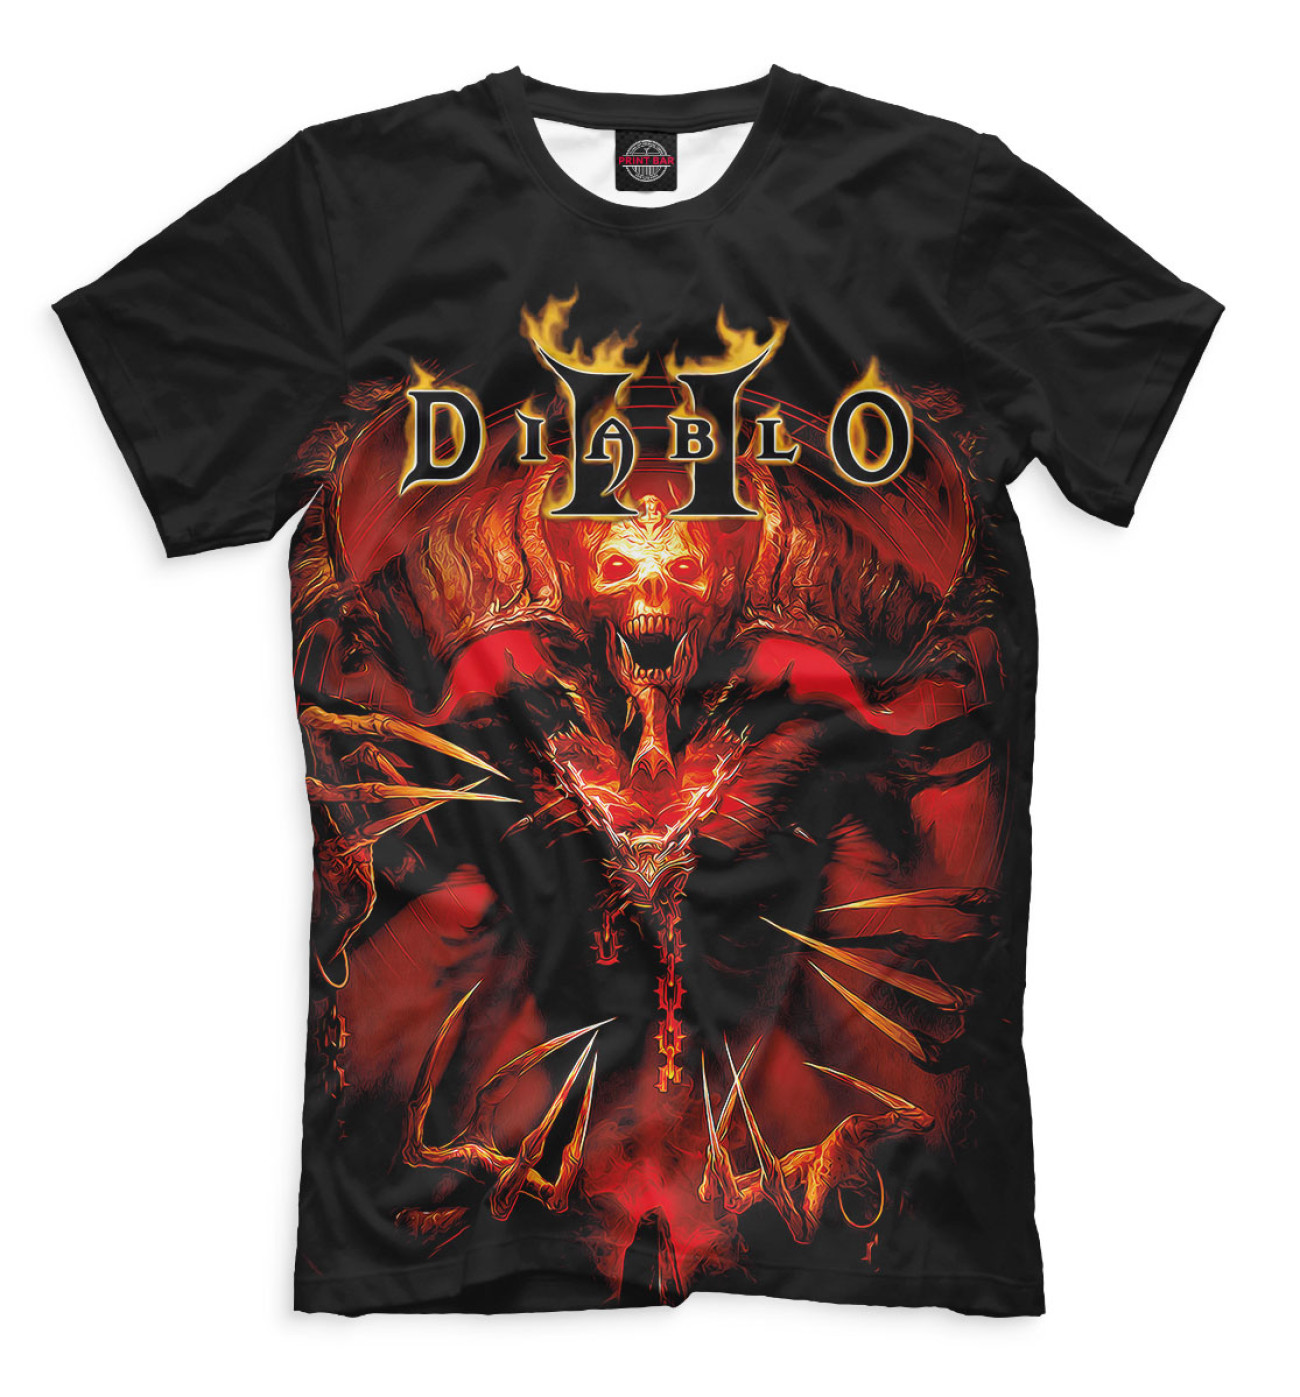 Мужская Футболка Diablo II, артикул: DBO-736239-fut-2